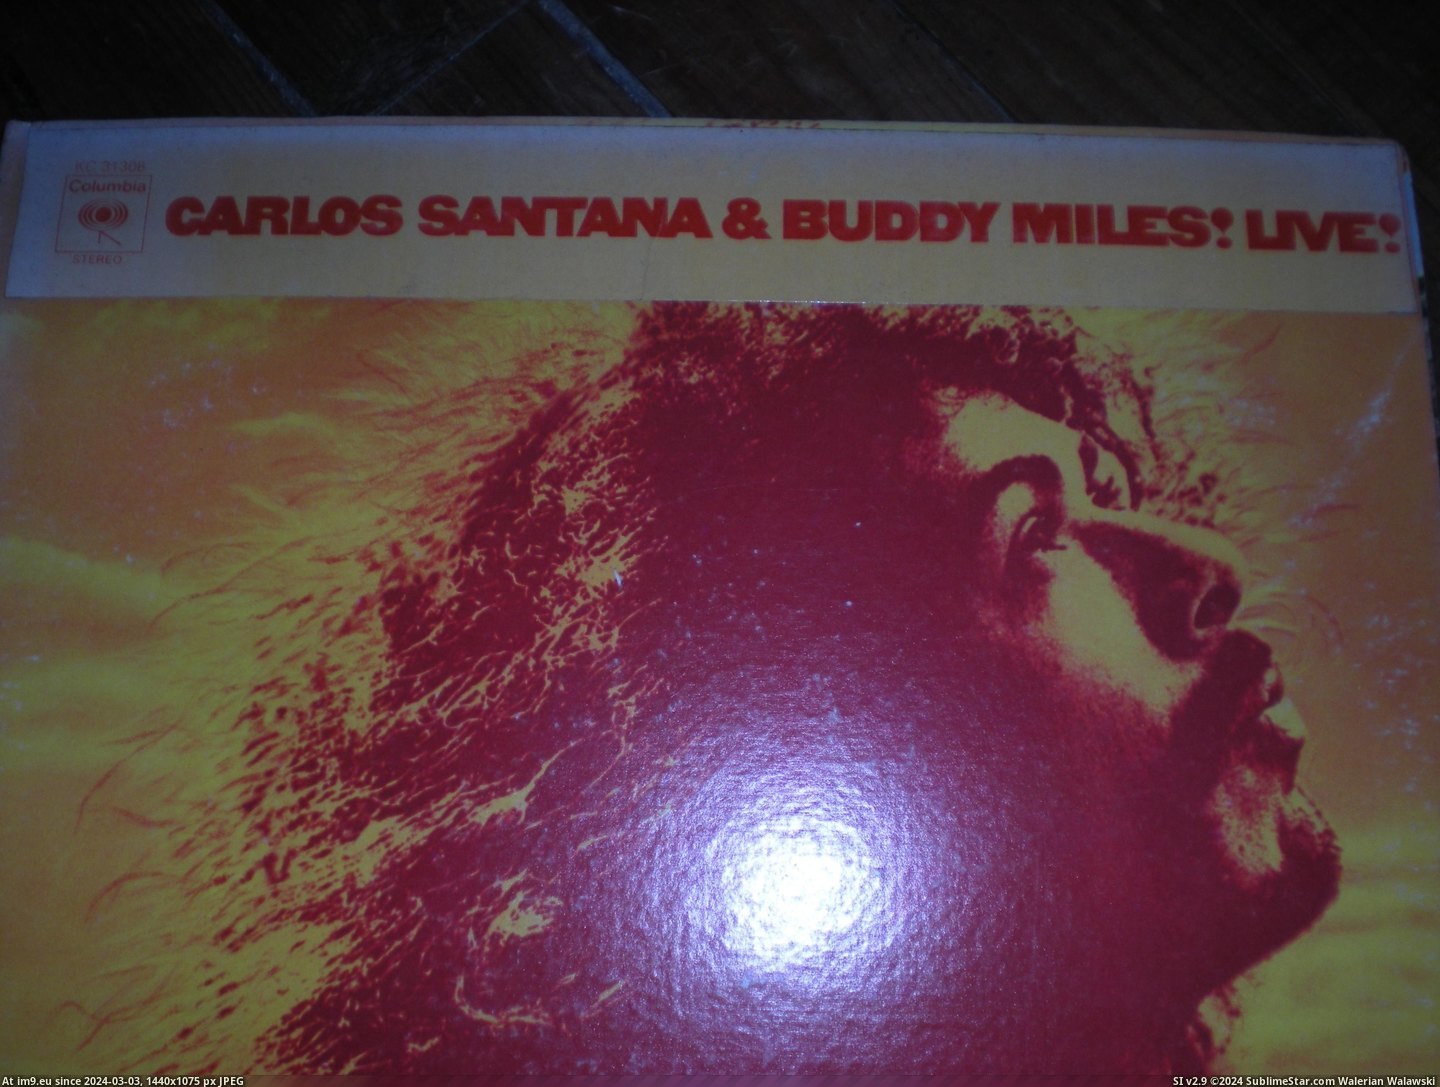 #Buddy #Santana #Miles Santana Buddy Miles 7 Pic. (Bild von album new 1))